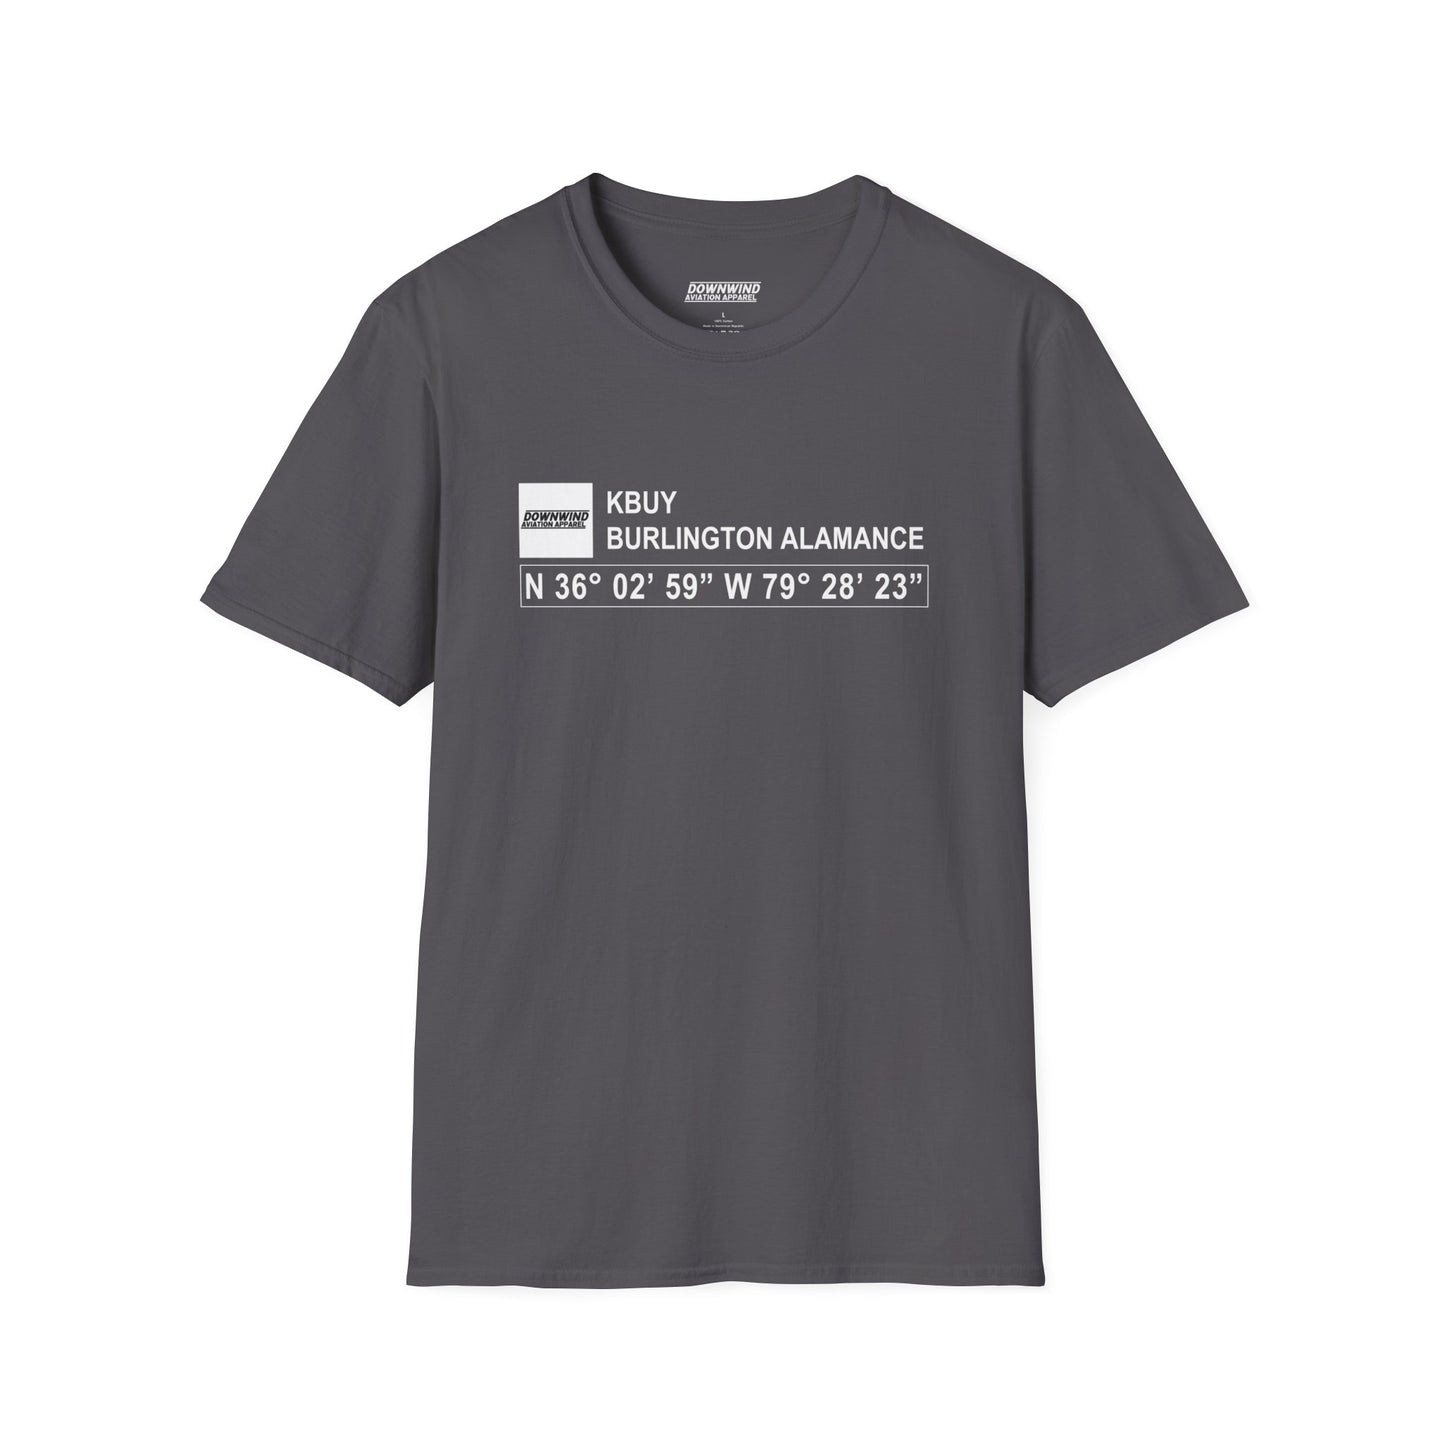 KBUY / Burlington Alamance T-Shirt